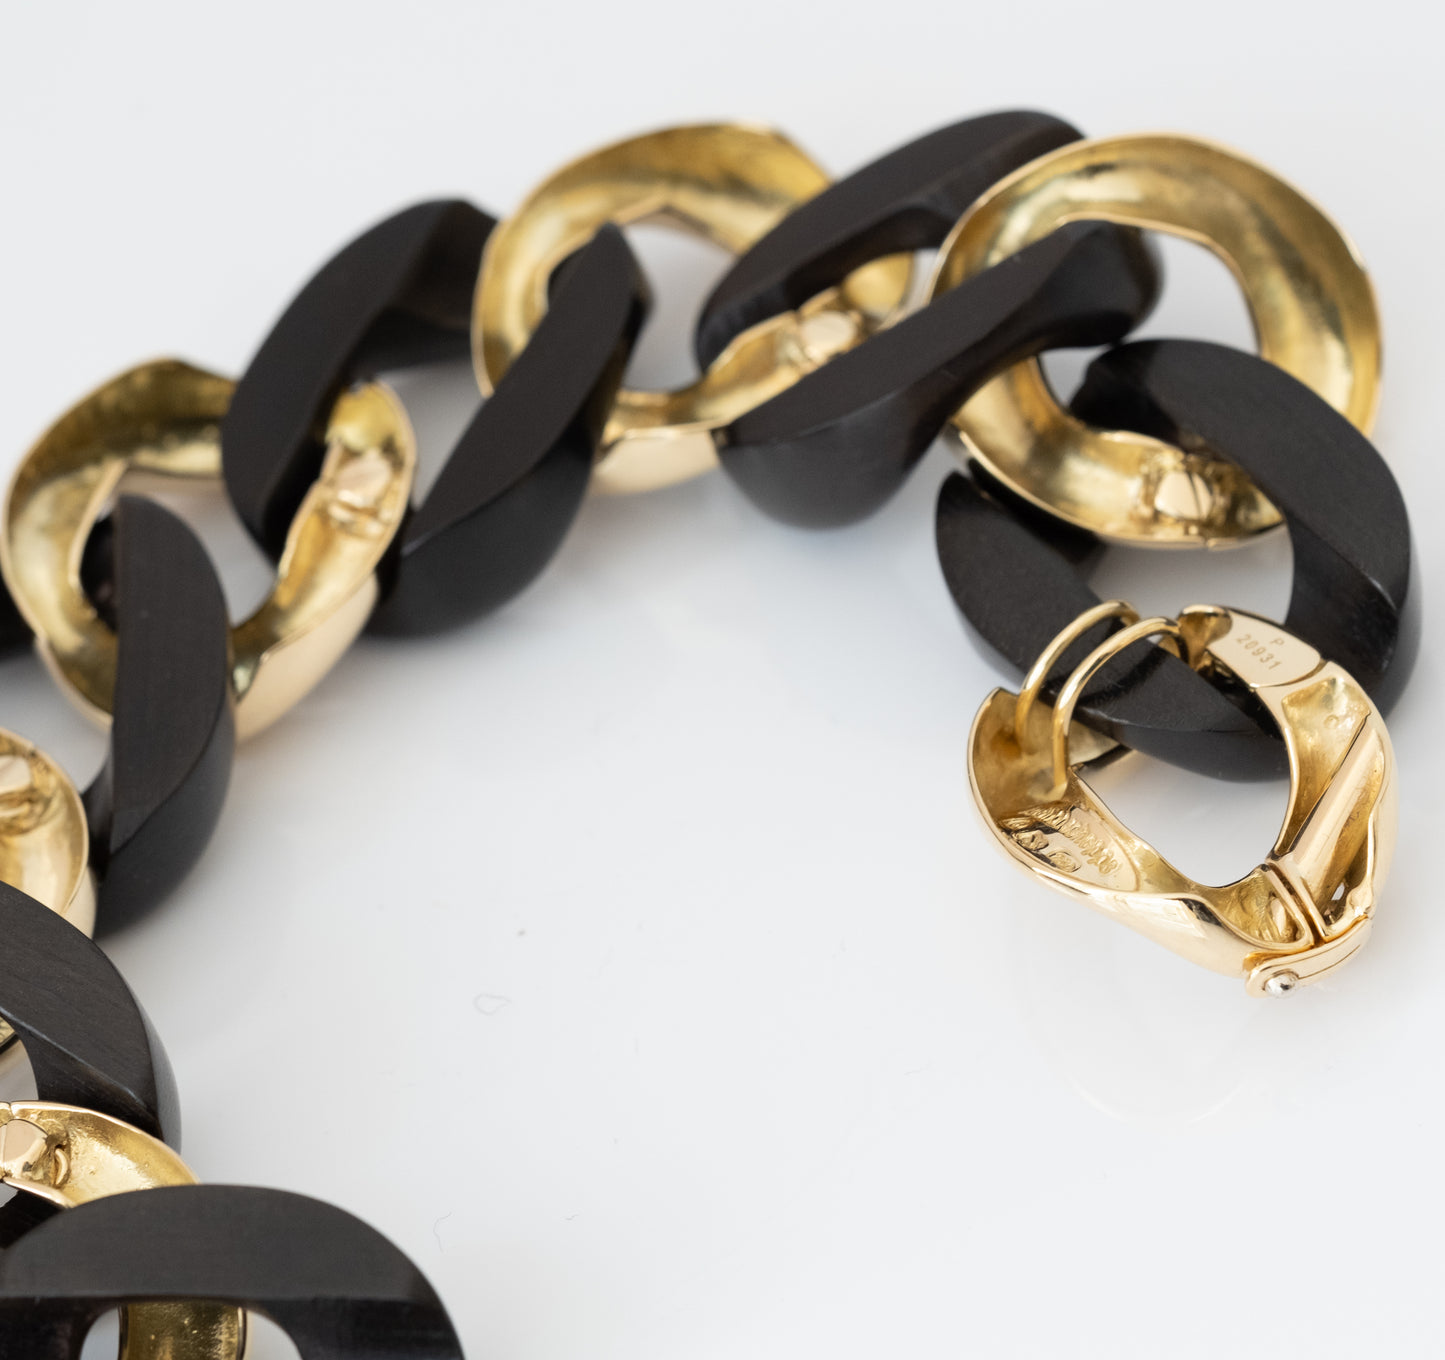 Gorgeous Seaman Schepps 18K Gold and Ebony Link Medium Bracelet - Premium Bracelet from All The Best Vintage - Just $9395! Shop now at All The Best Vintage